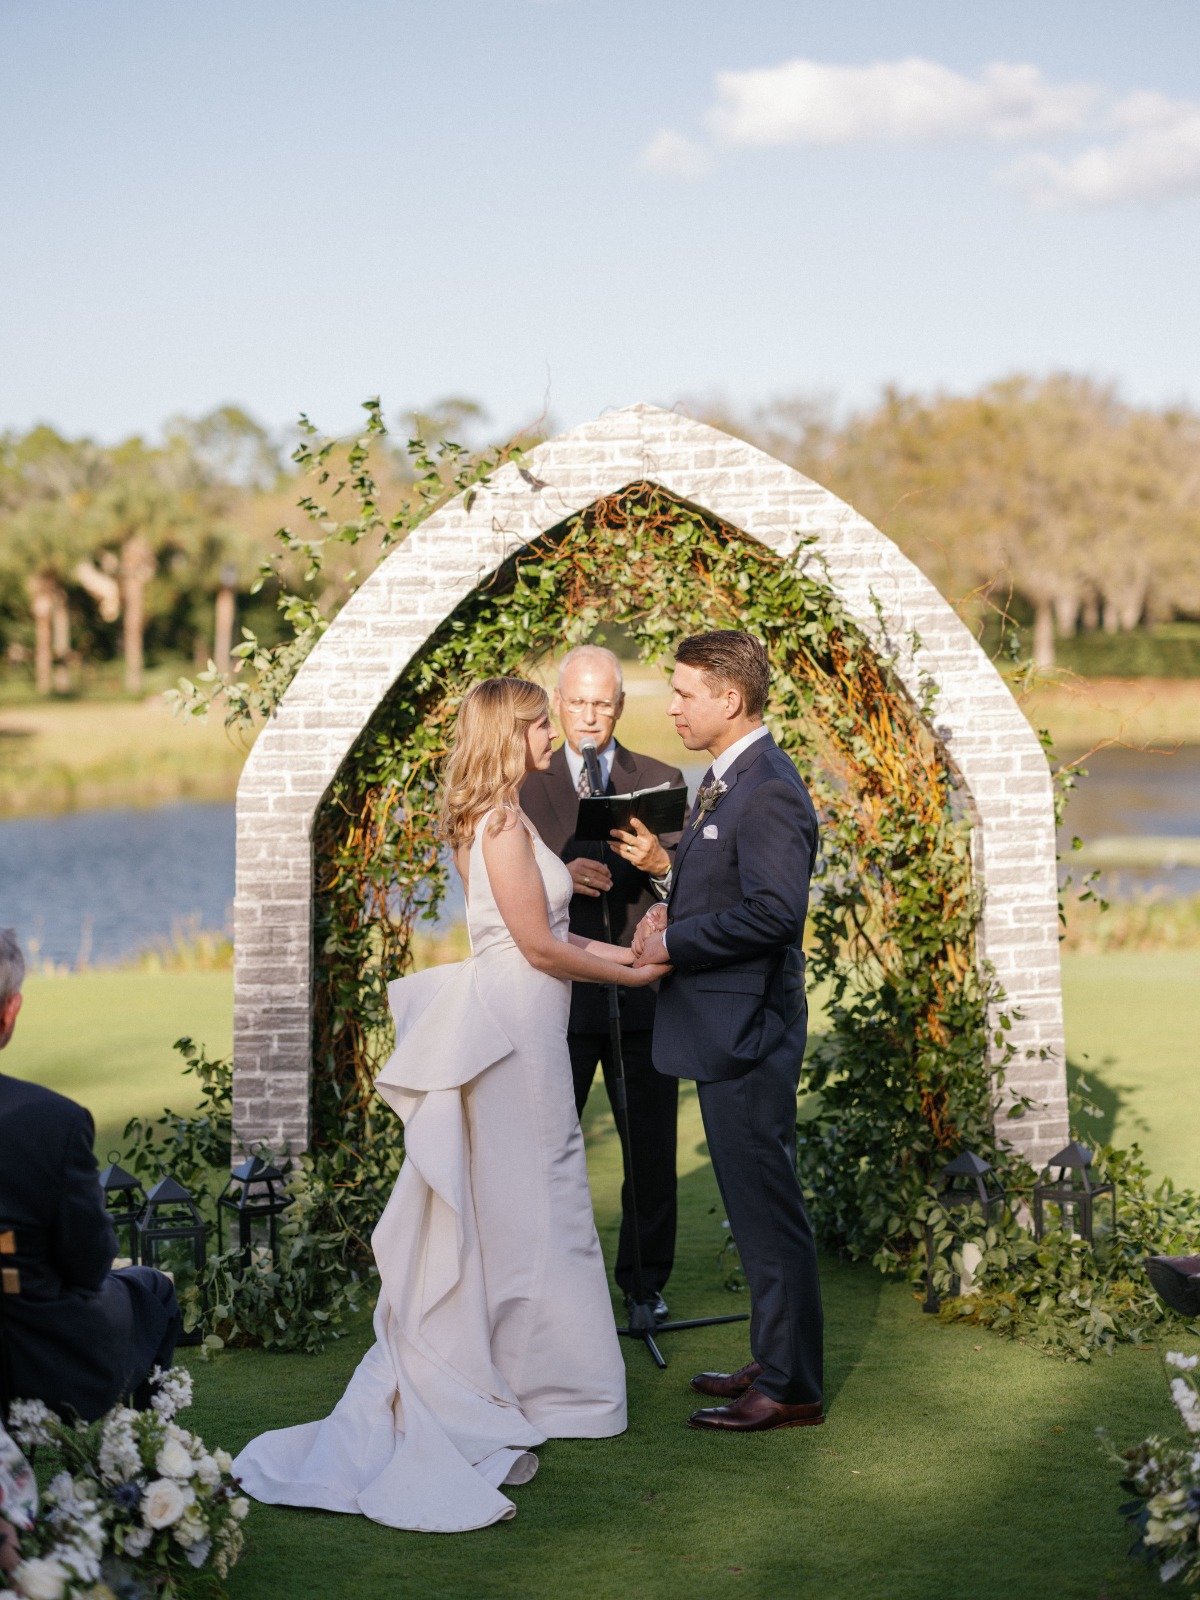 romantic wedding ceremony with stone arch